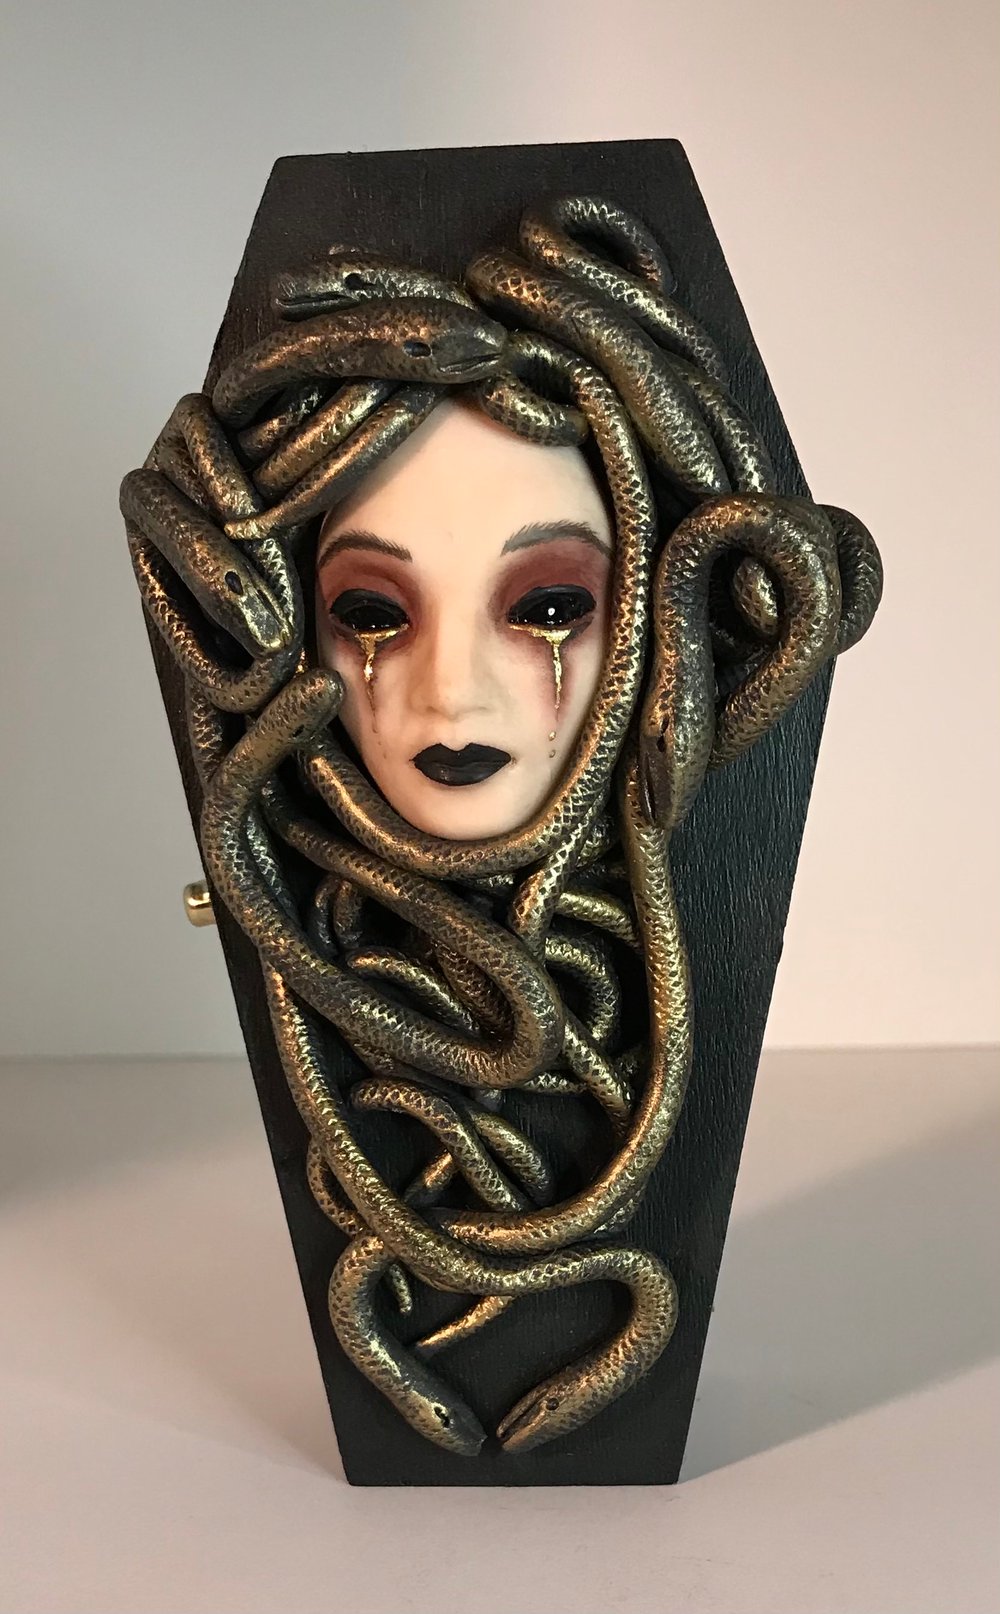 Image of “Medusa Monster” Original sculpture